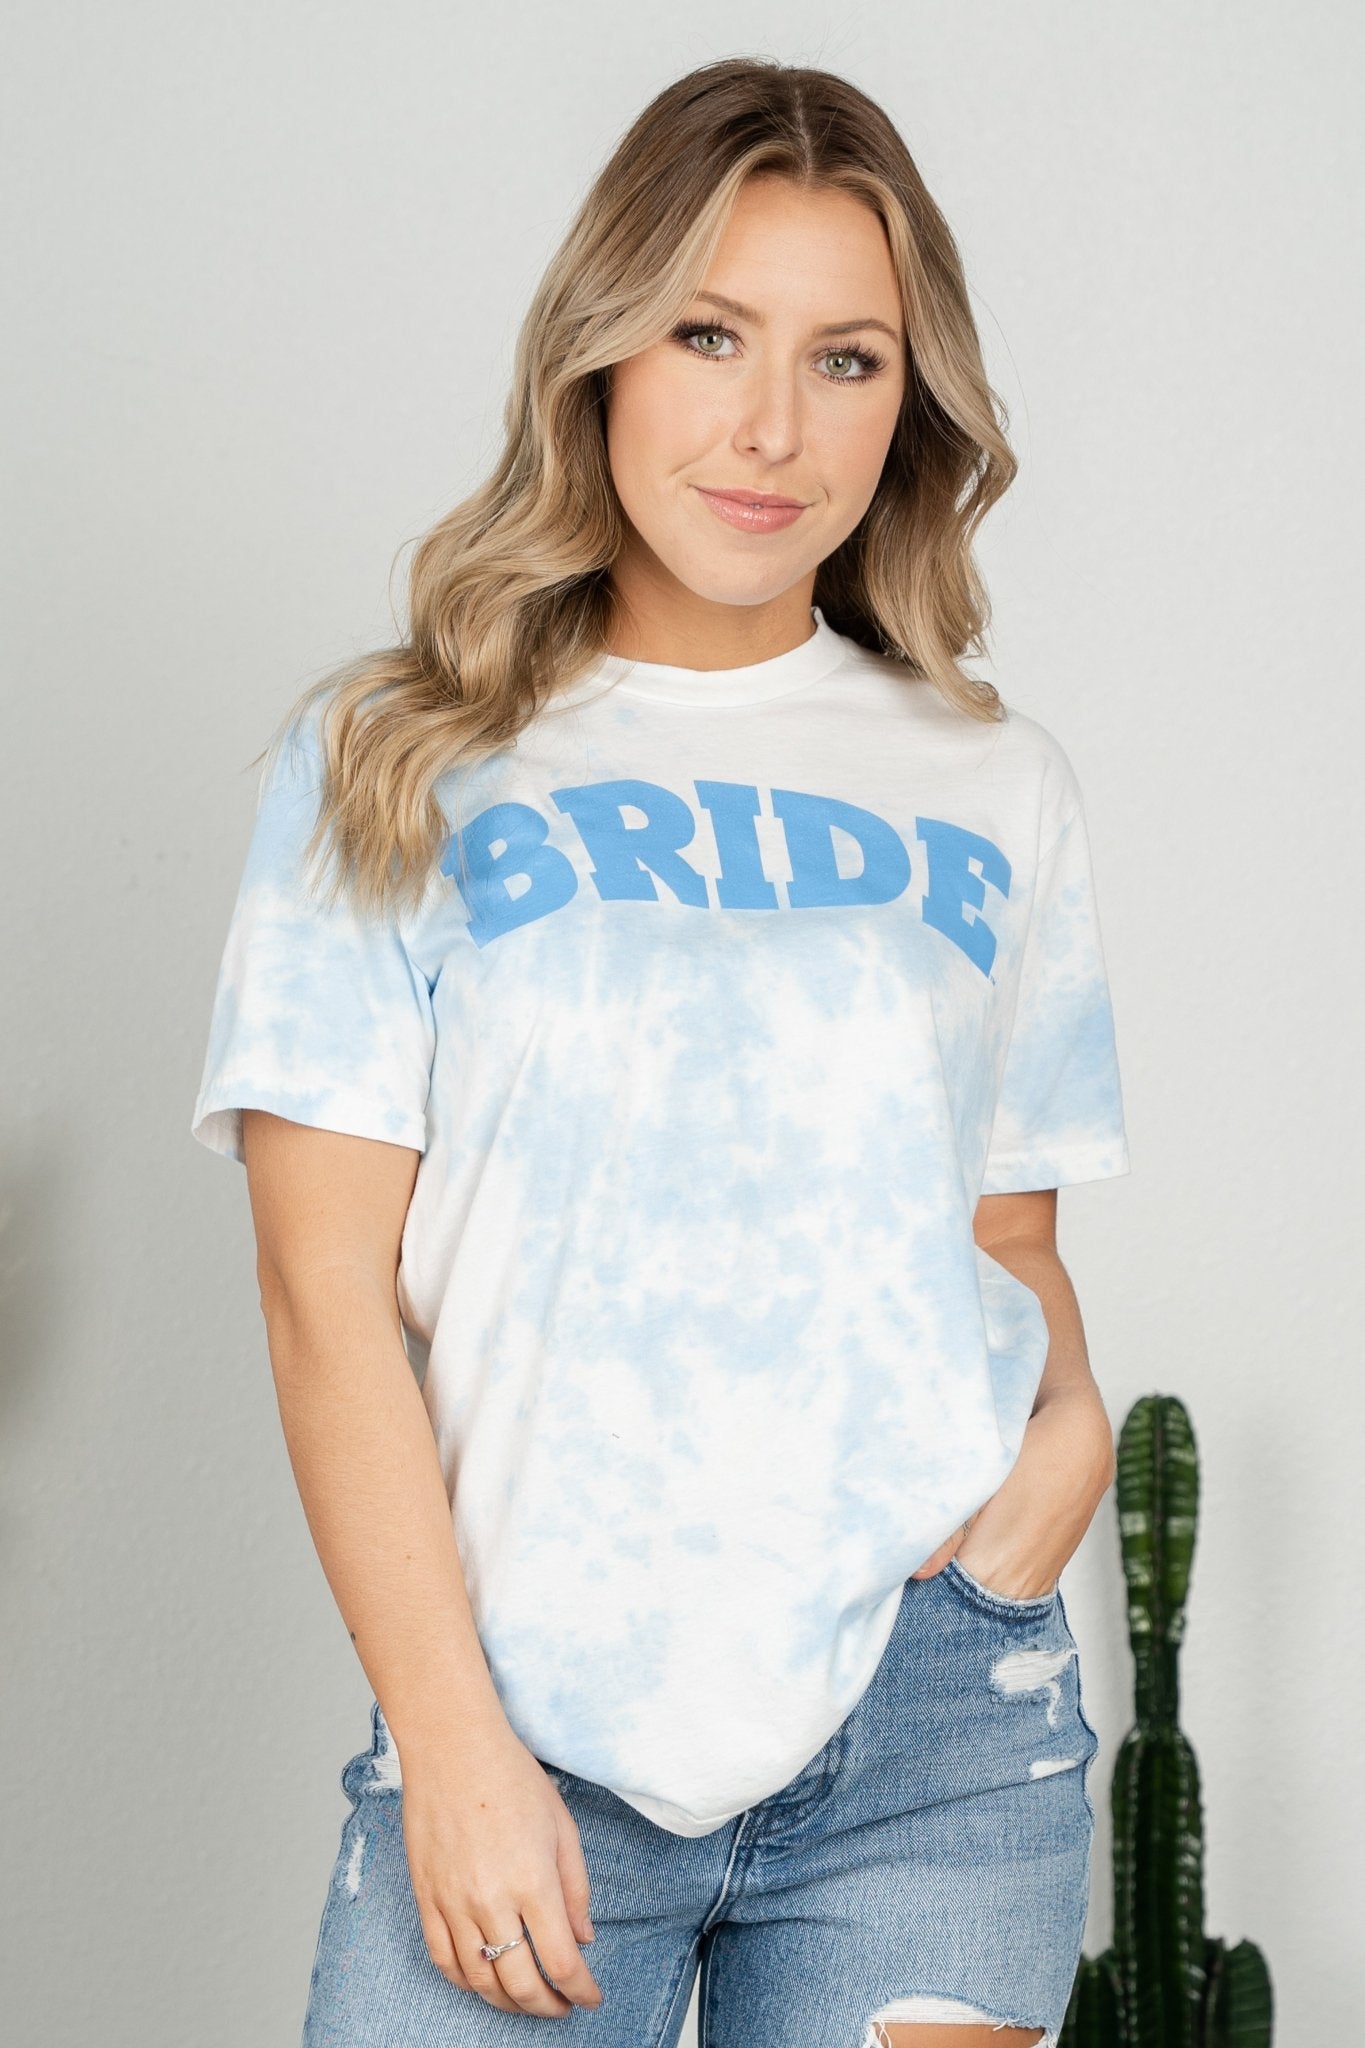 Bride dream on tie dye t-shirt blue - Tie Dye T-shirts - Tie Dye T-Shirts at Lush Fashion Lounge Trendy Boutique in Oklahoma City